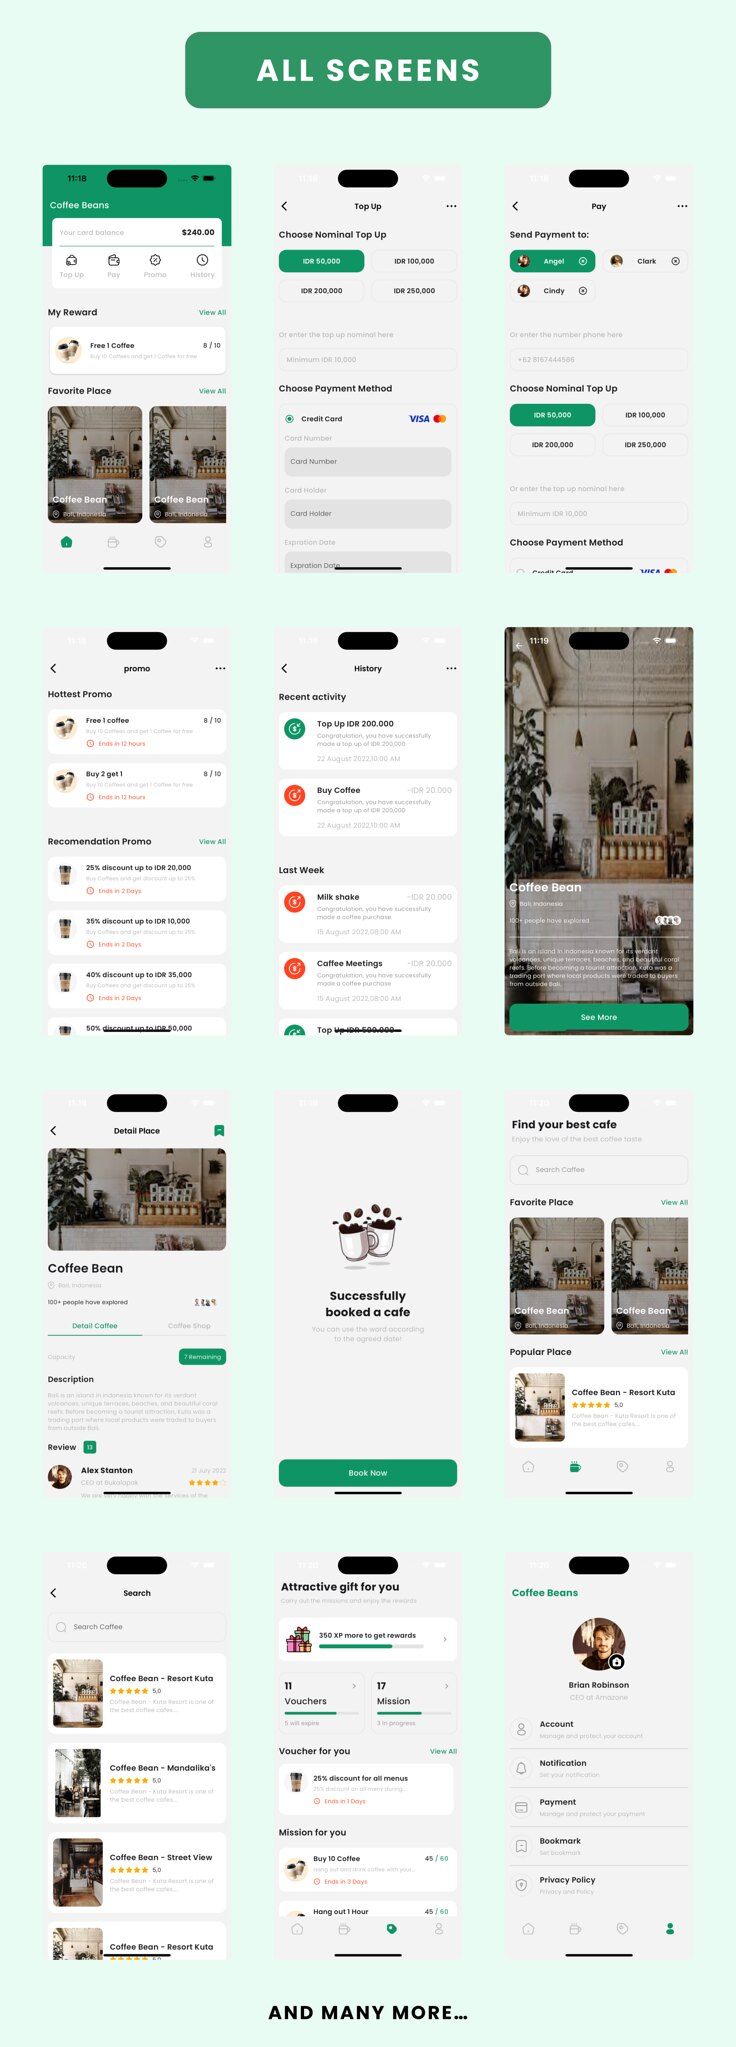 Cafe App - Online Complete Restaurant/Cafe Flutter App | Android | iOS Mobile App Template